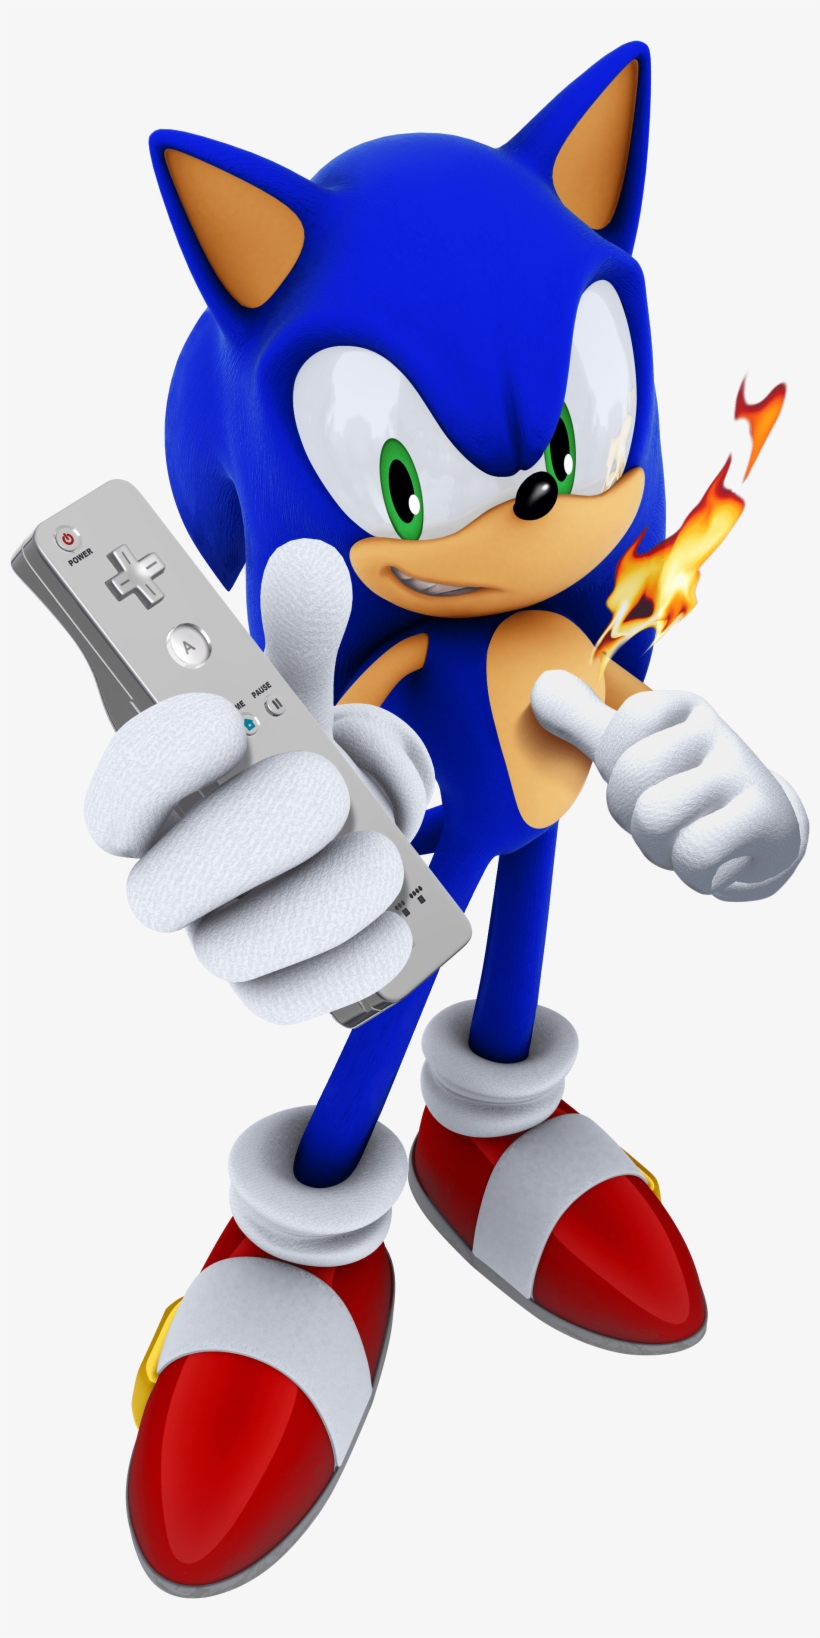 Sonic the Hedgehog ring PNG transparent image download, size